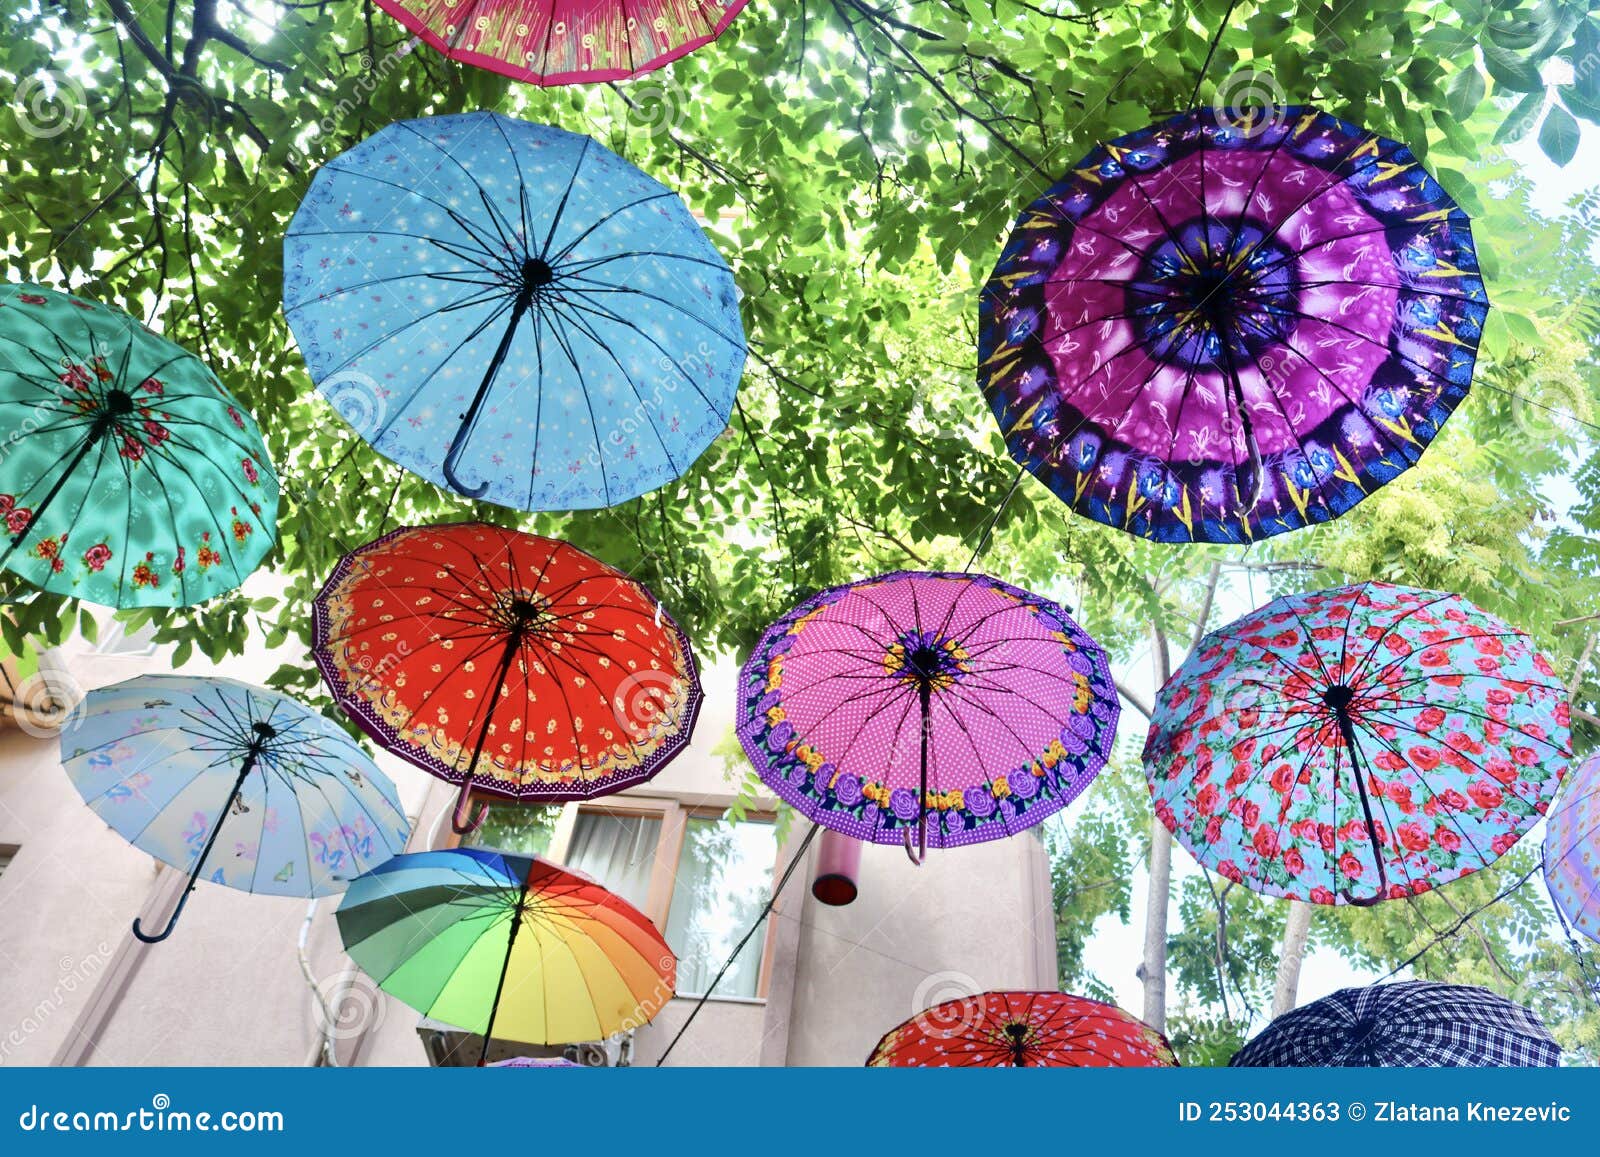 umbrella decor in kadikoy